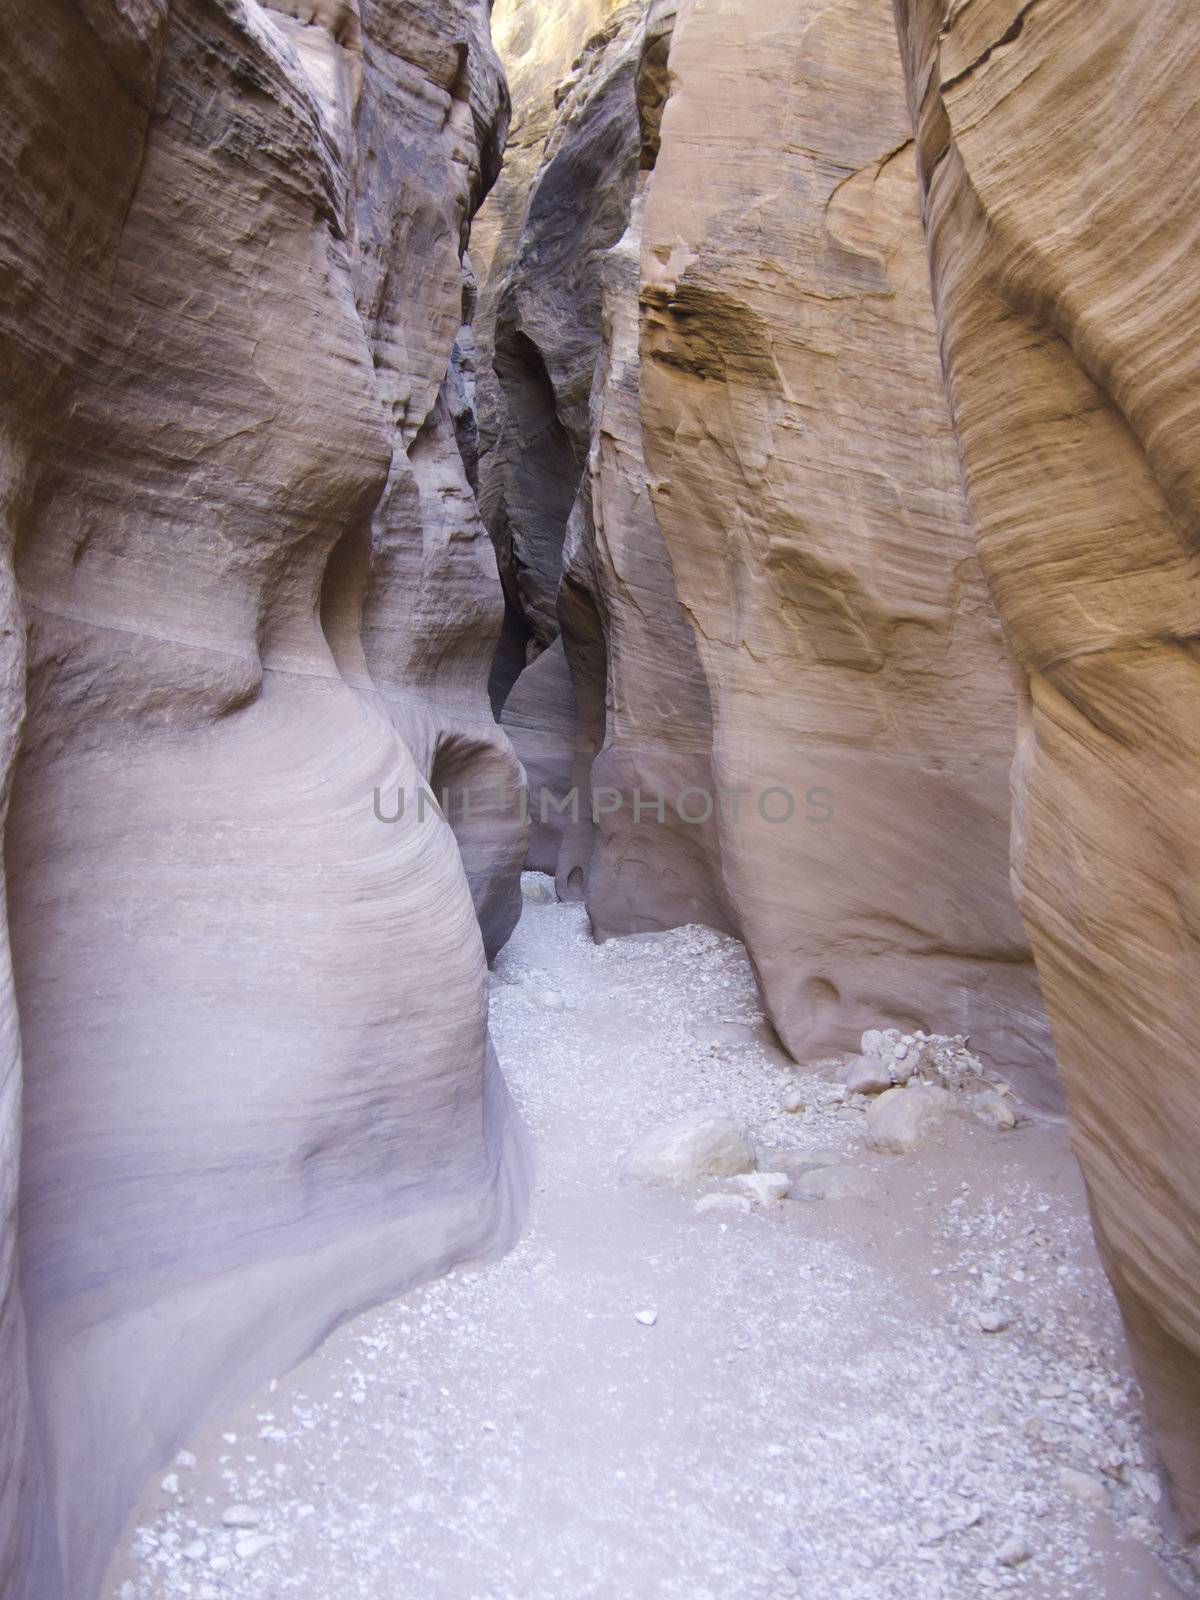 slot canyon southern utah hiking dry